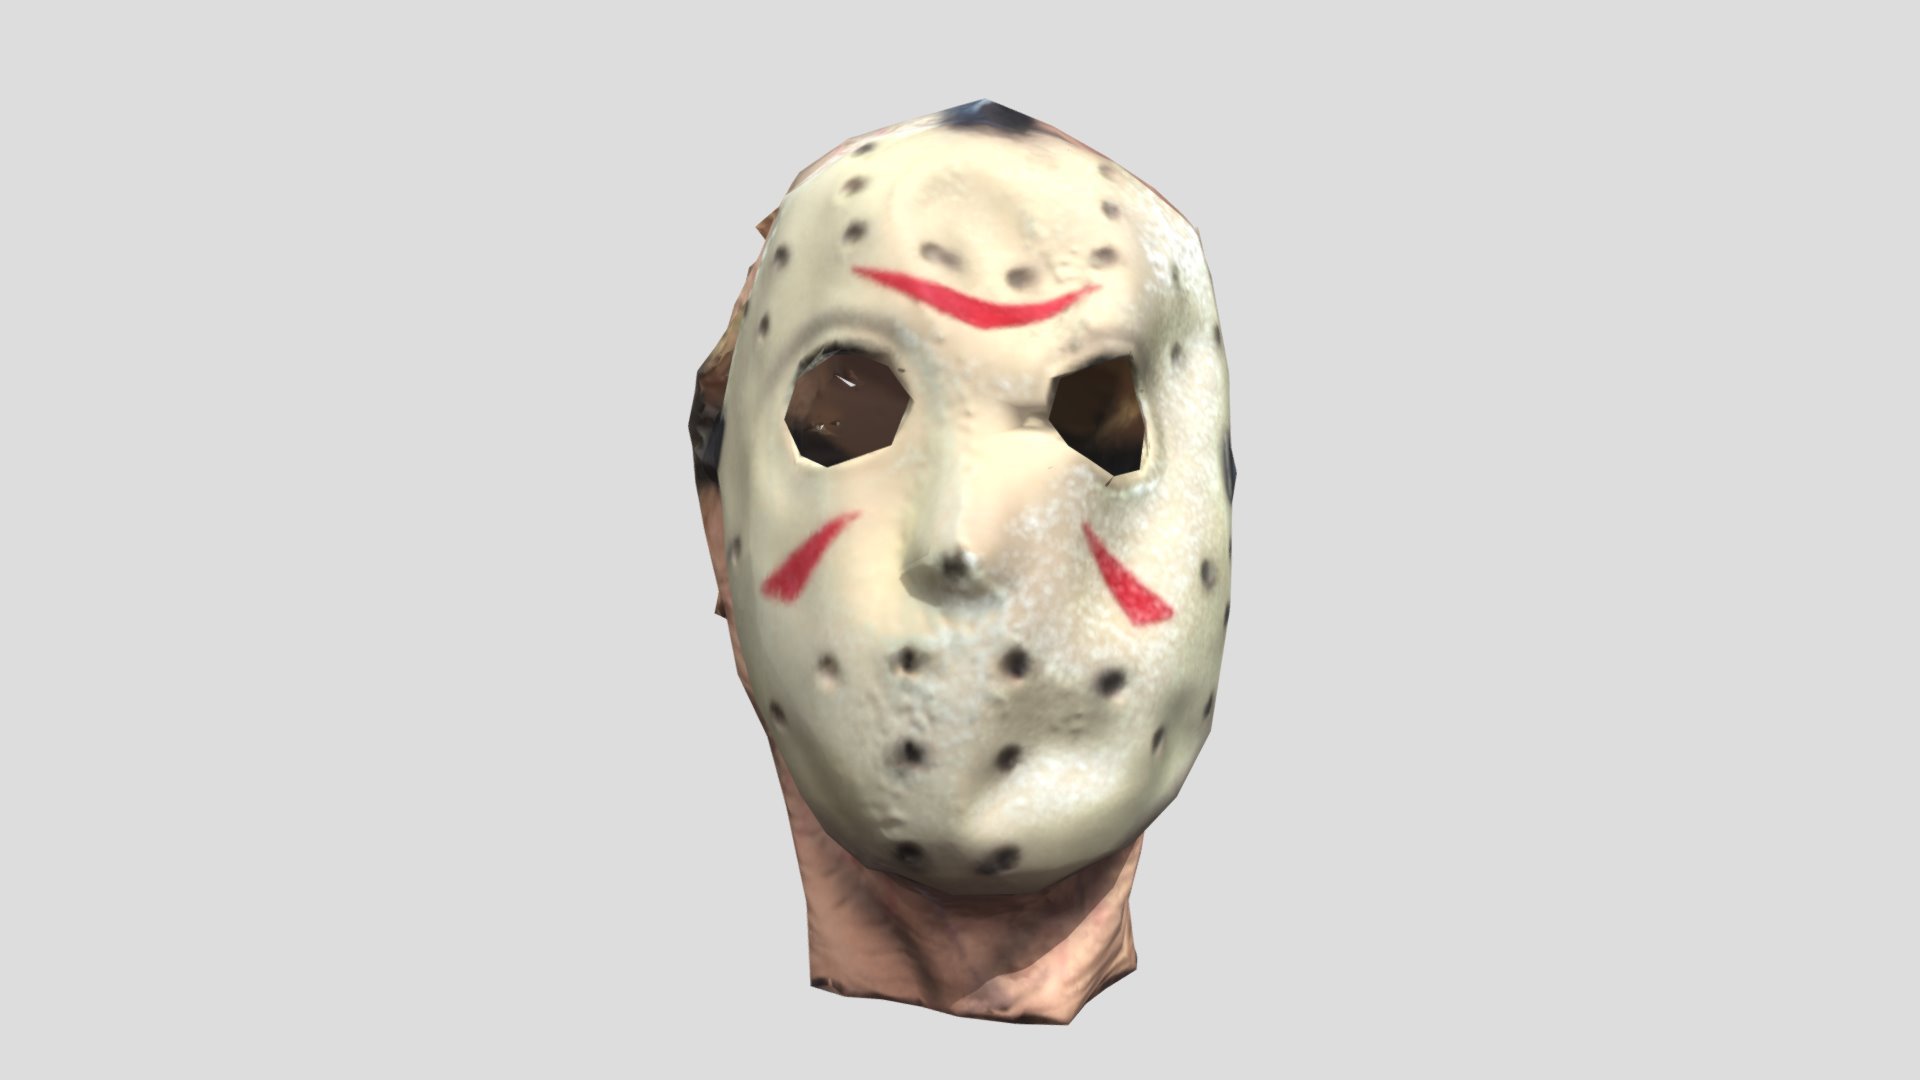 Jason Vorhees Mask (Friday The 13th)